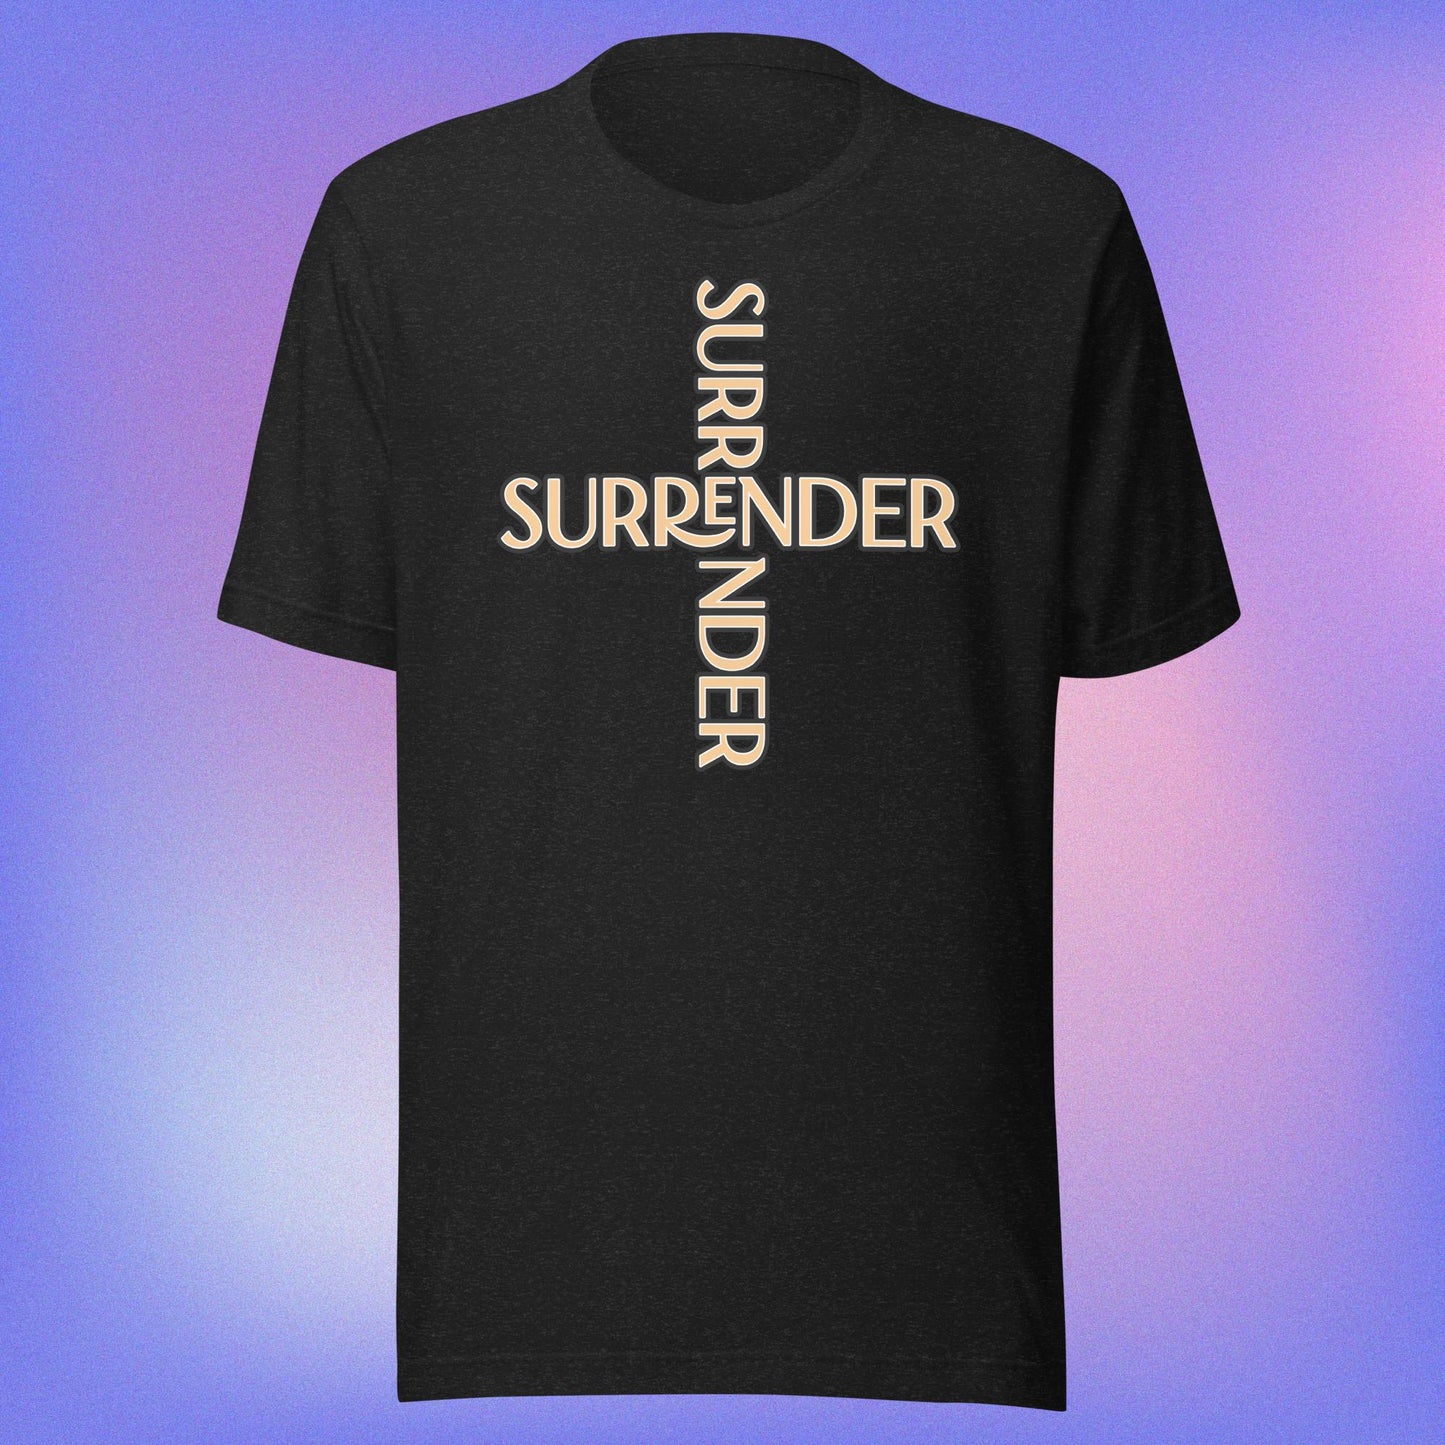 "SURRENDER" Unisex t-shirt